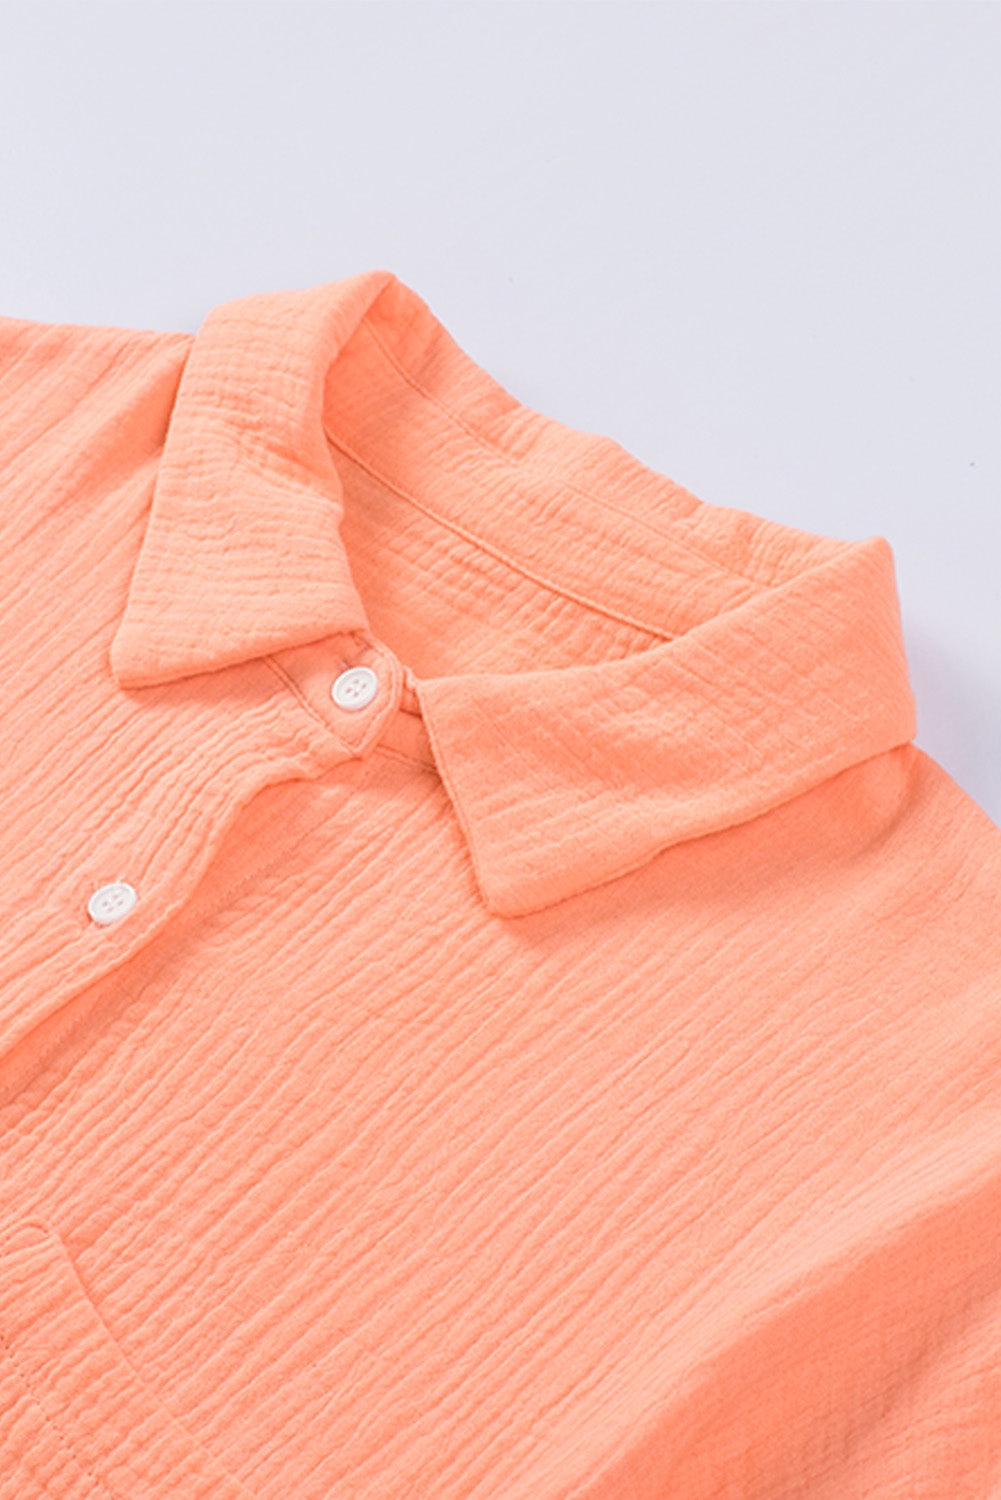 Bohemian Textured Drop Shoulder Color Block Longline Shirt